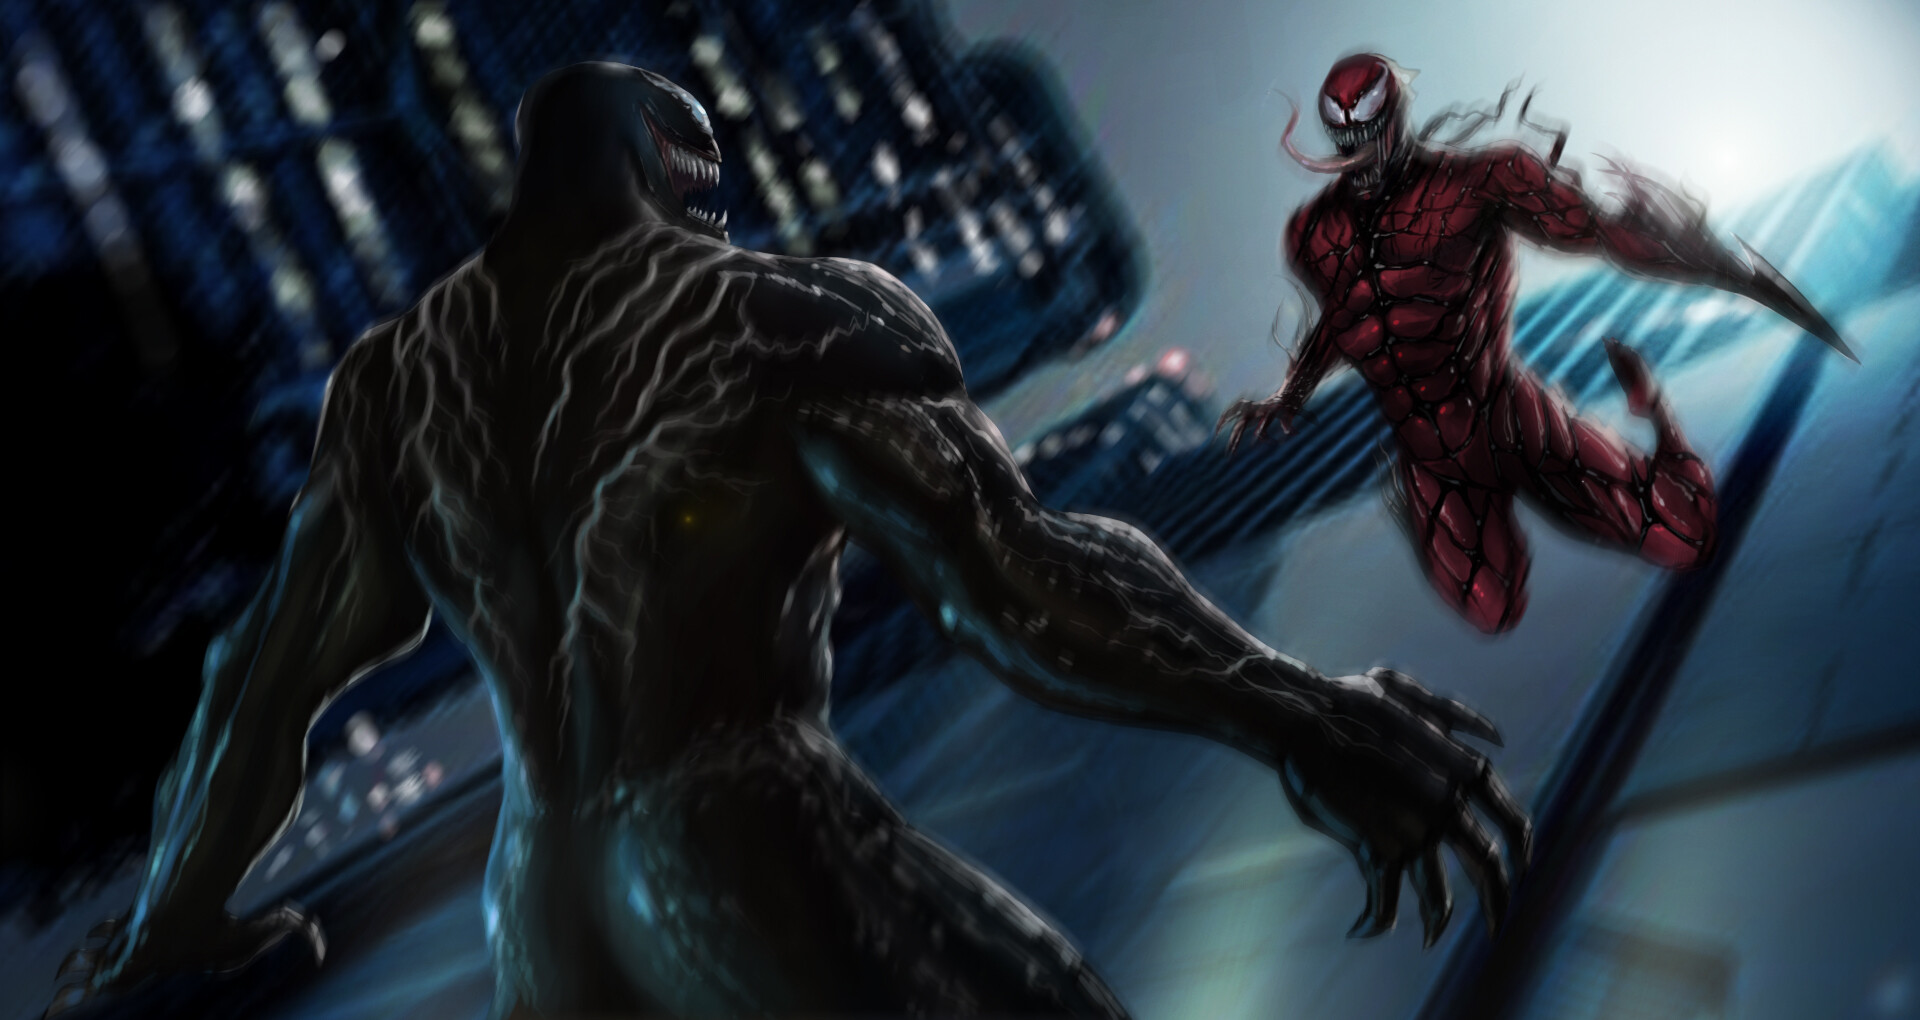 Suvam D Fellow - Venom vs Carnage concept art